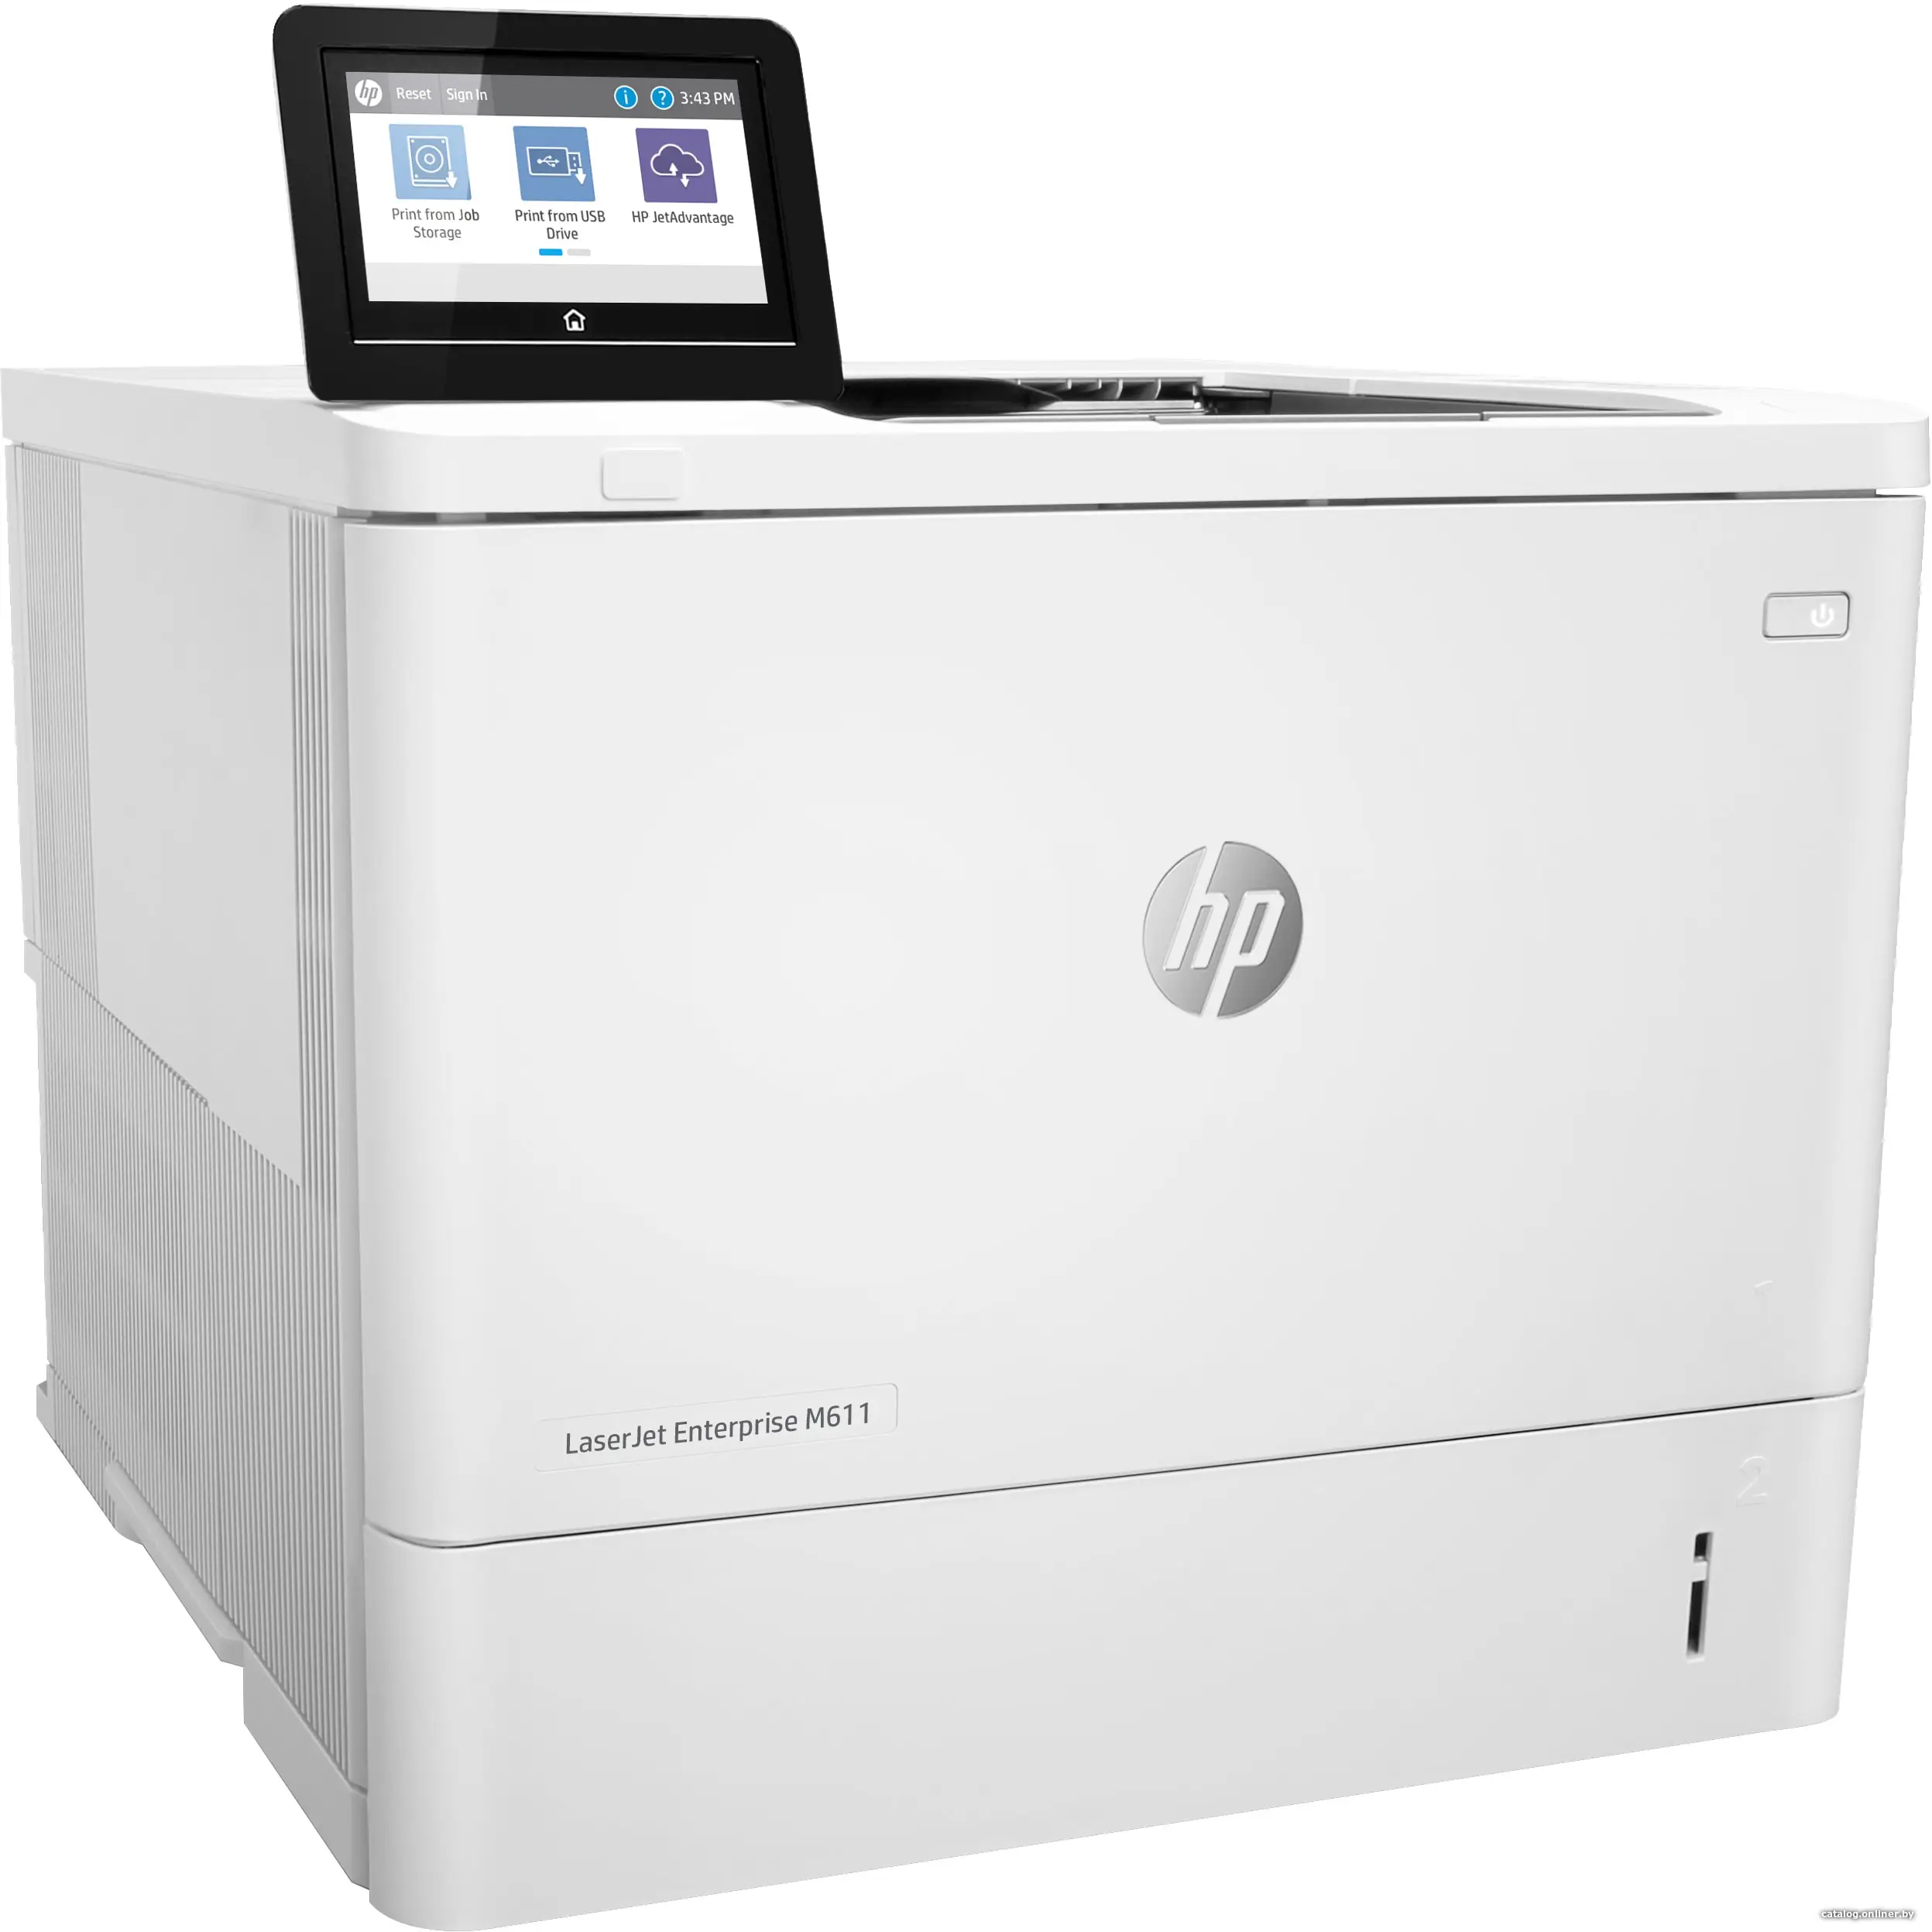 Купить Принтер HP LaserJet Enterprise M611dn (7PS84A), цена, опт и розница